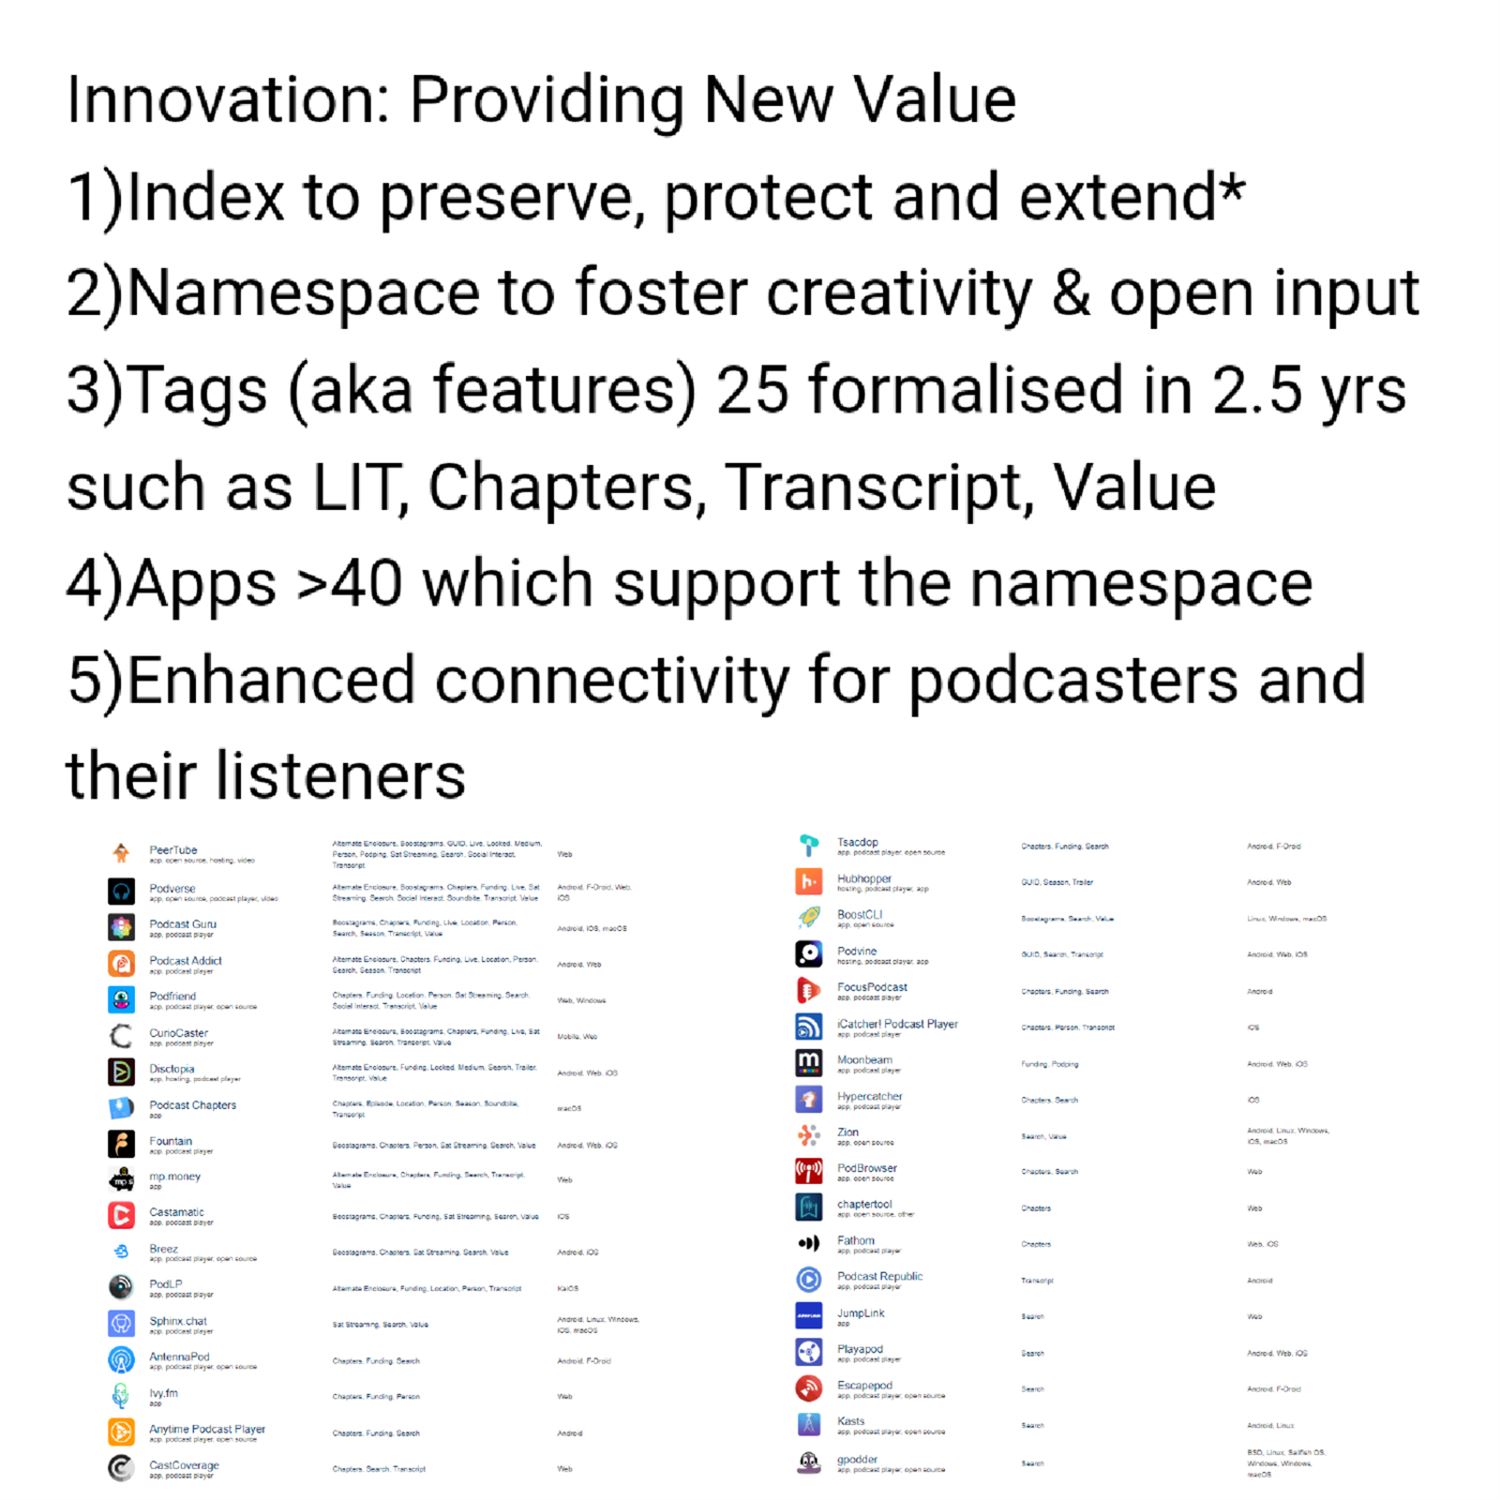 Innovation: Providing new value